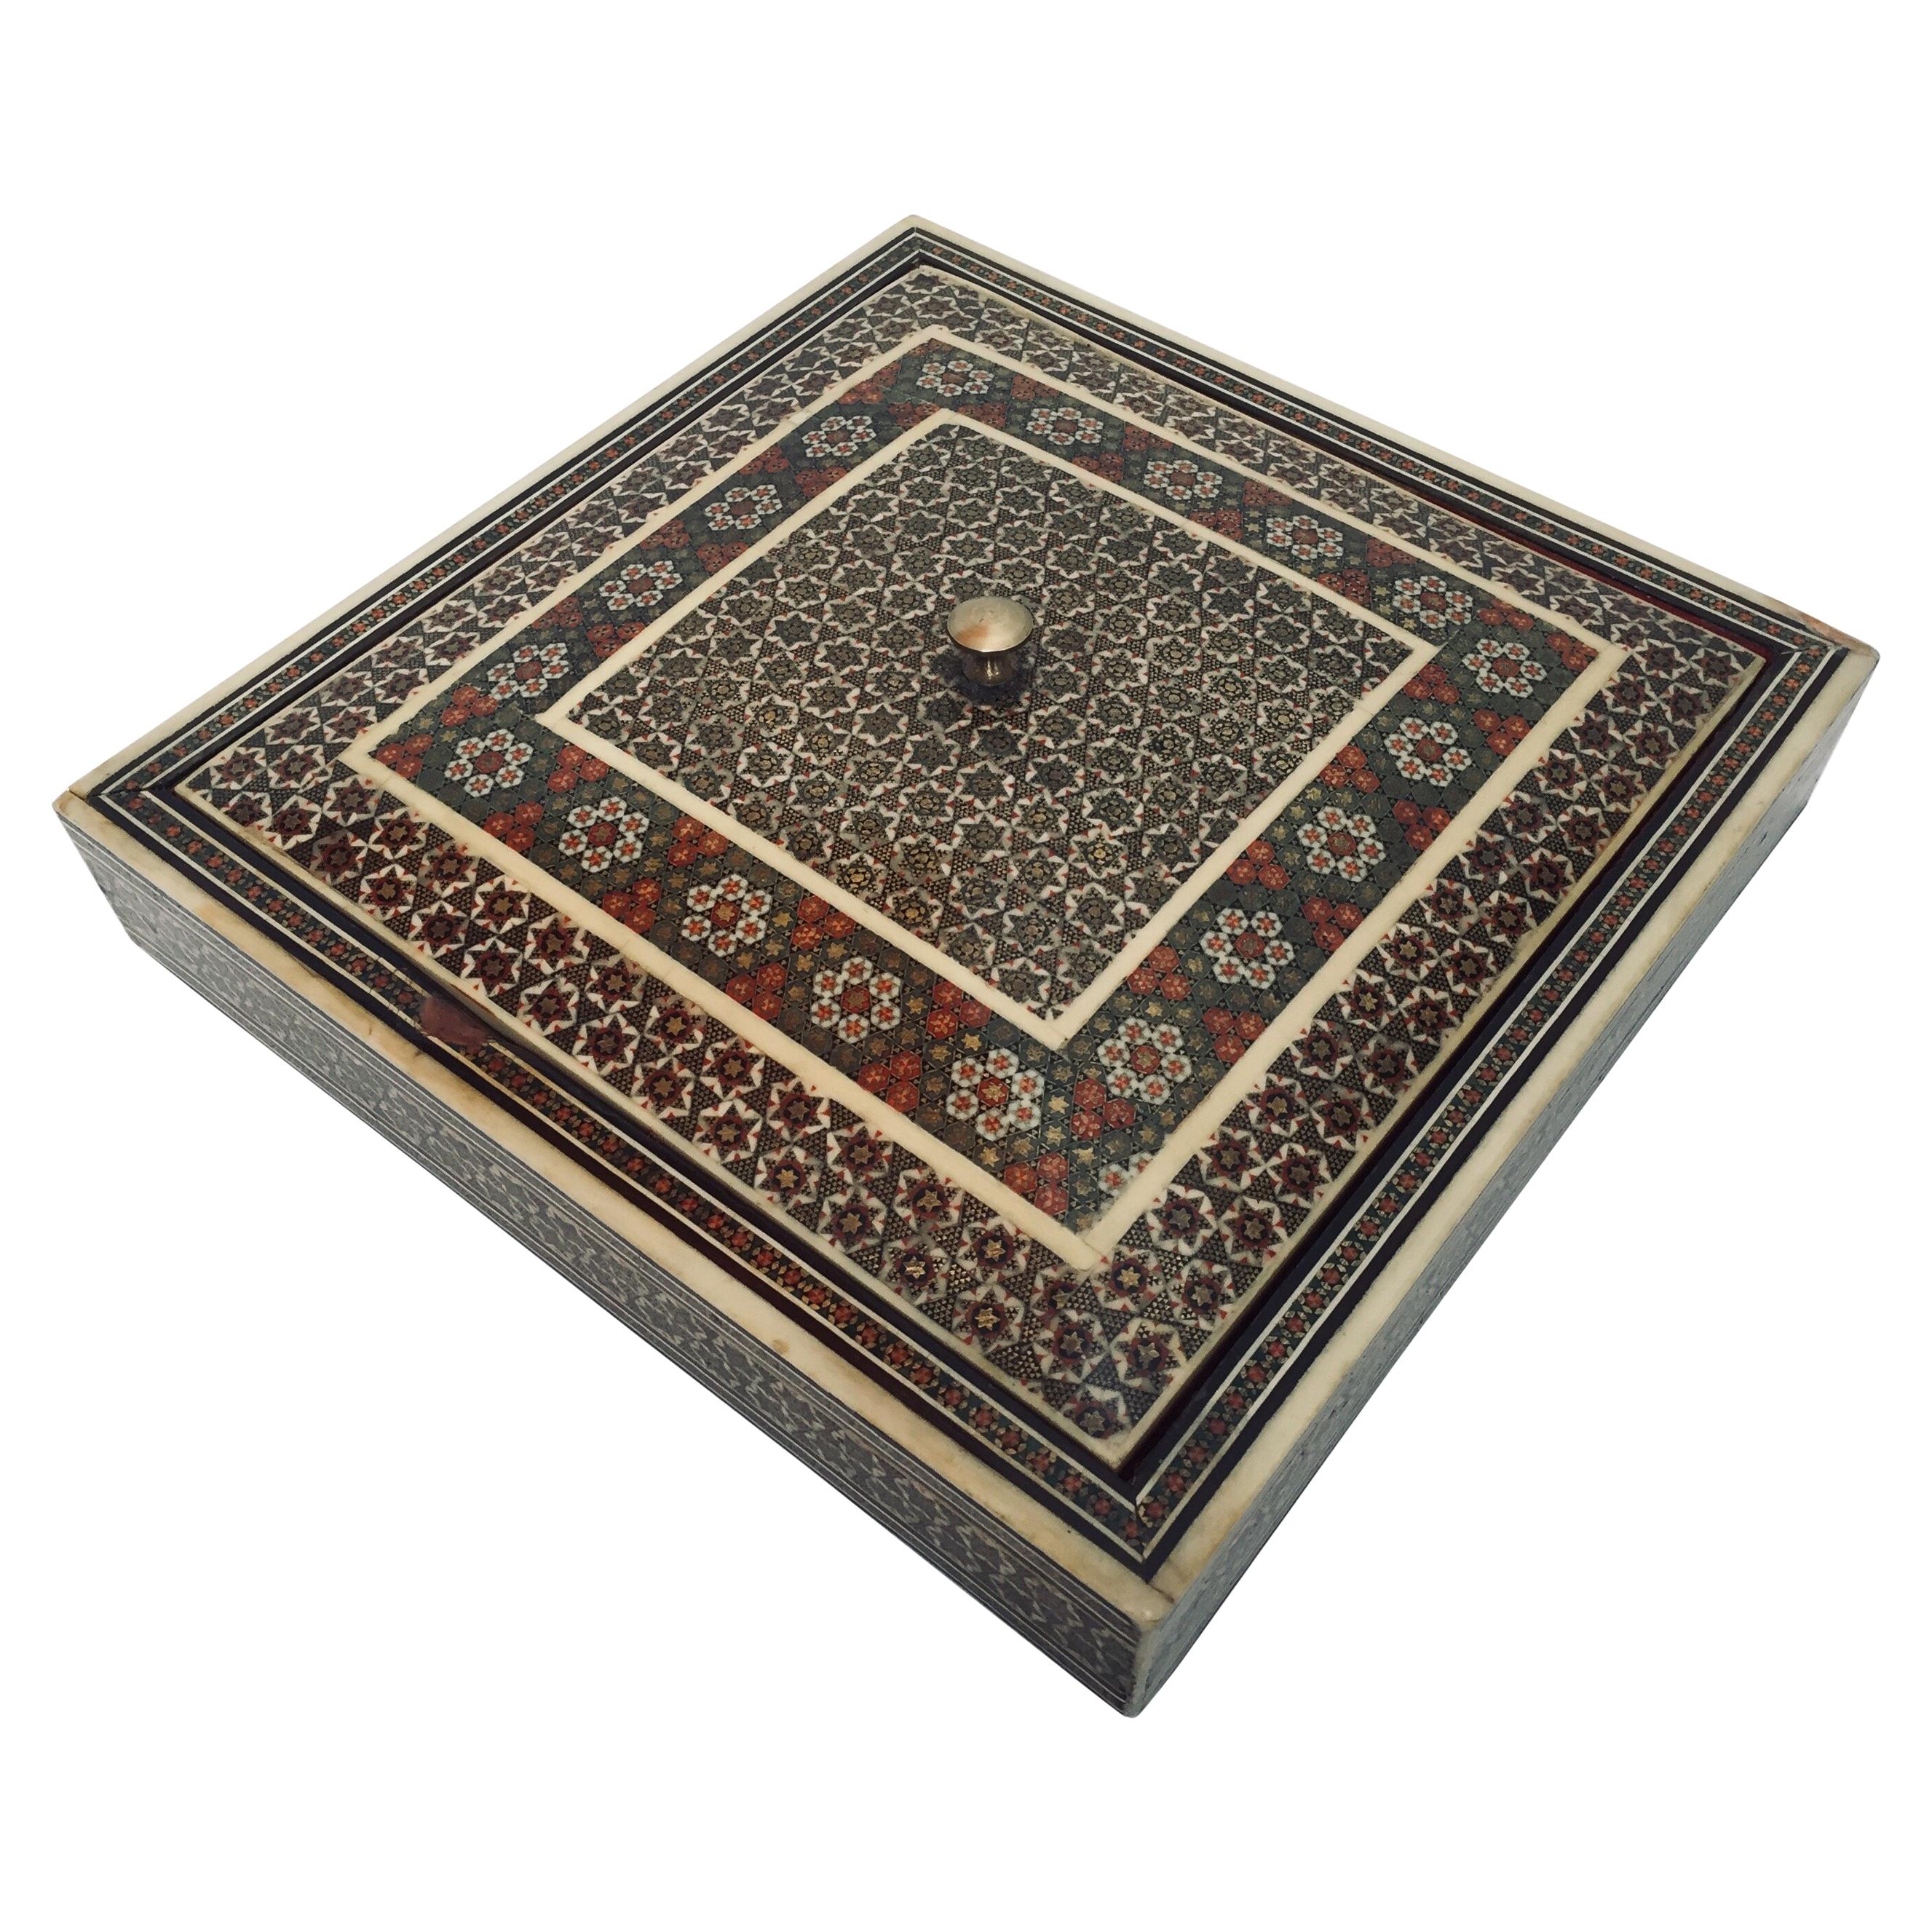 Persian Sadeli Micro Mosaic Inlaid Jewelry Box